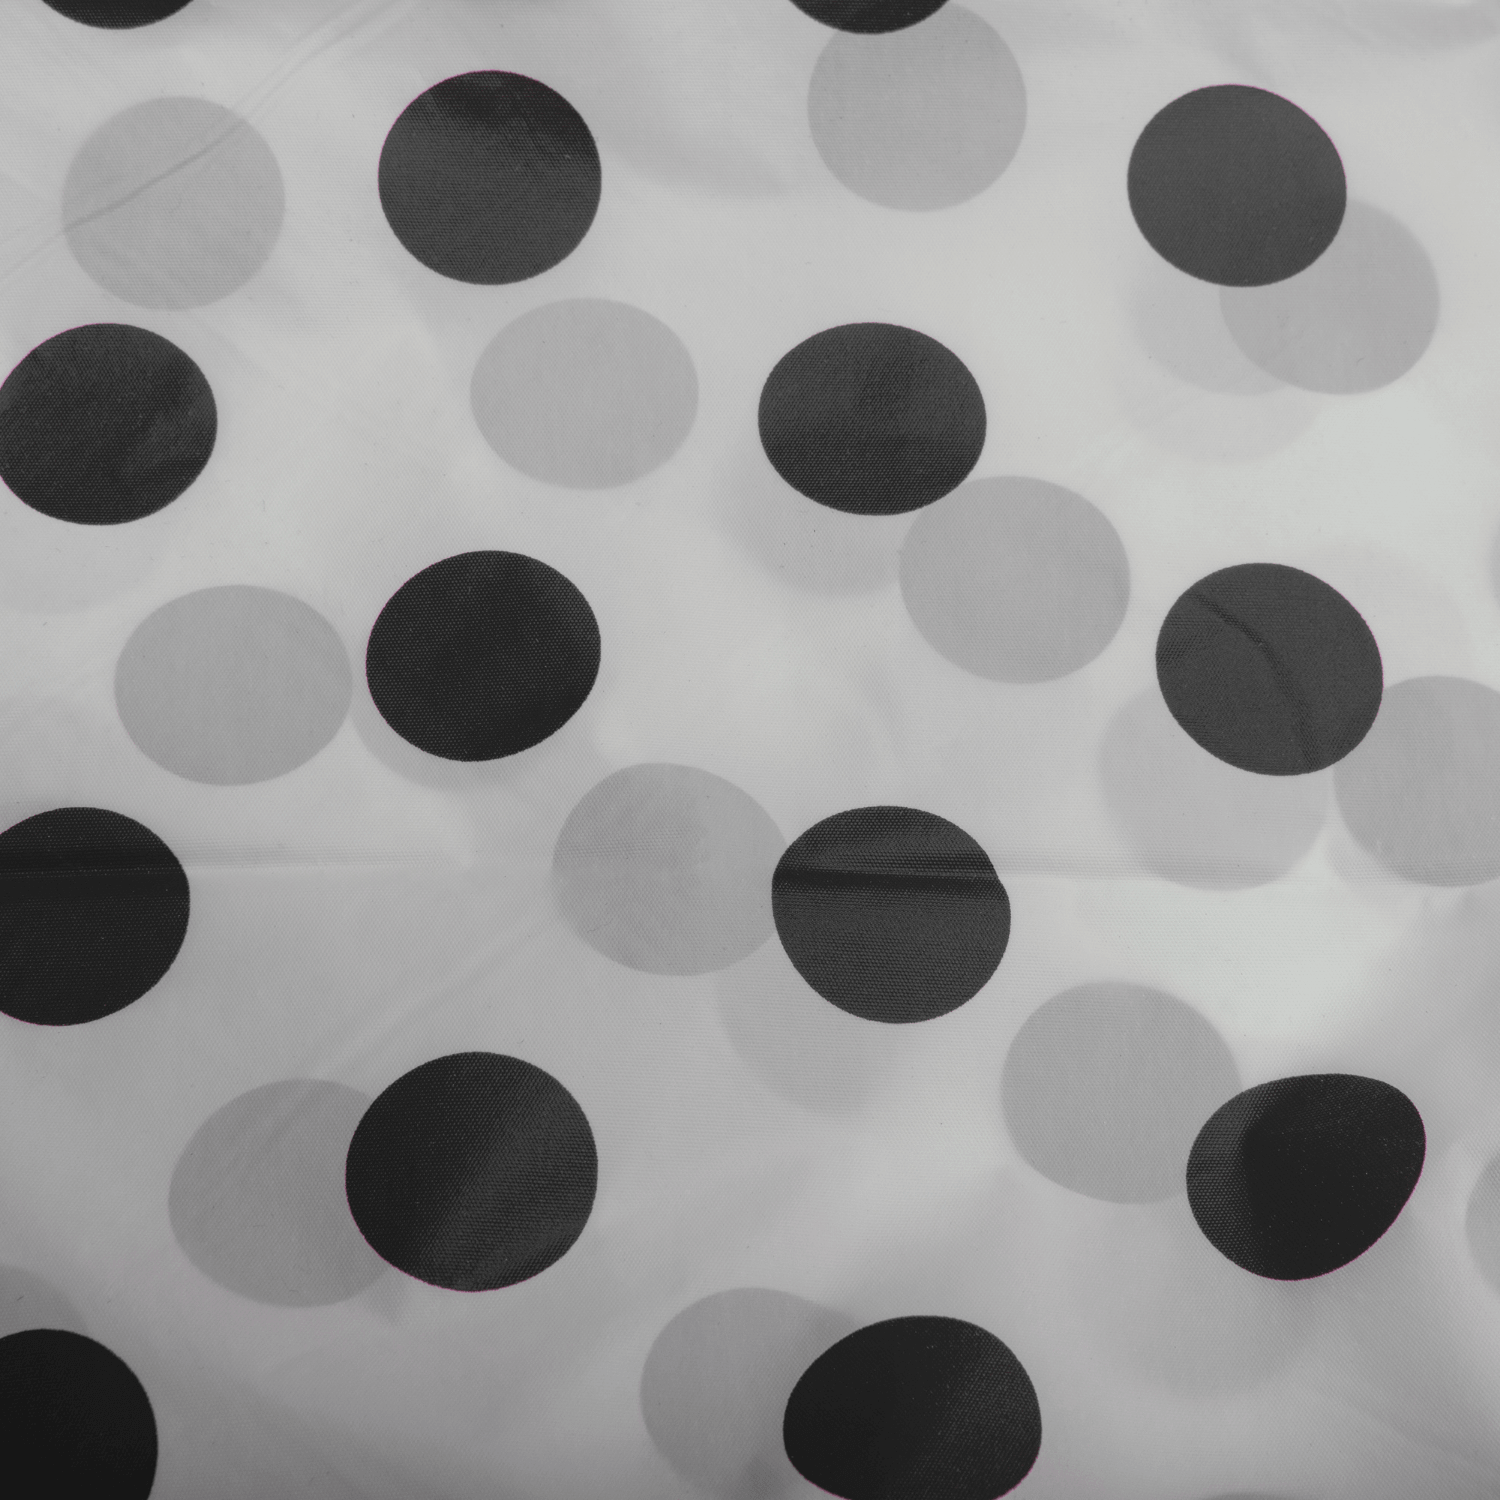 Black Polka Dot Printed Plastic Table Cloth | 48 Count